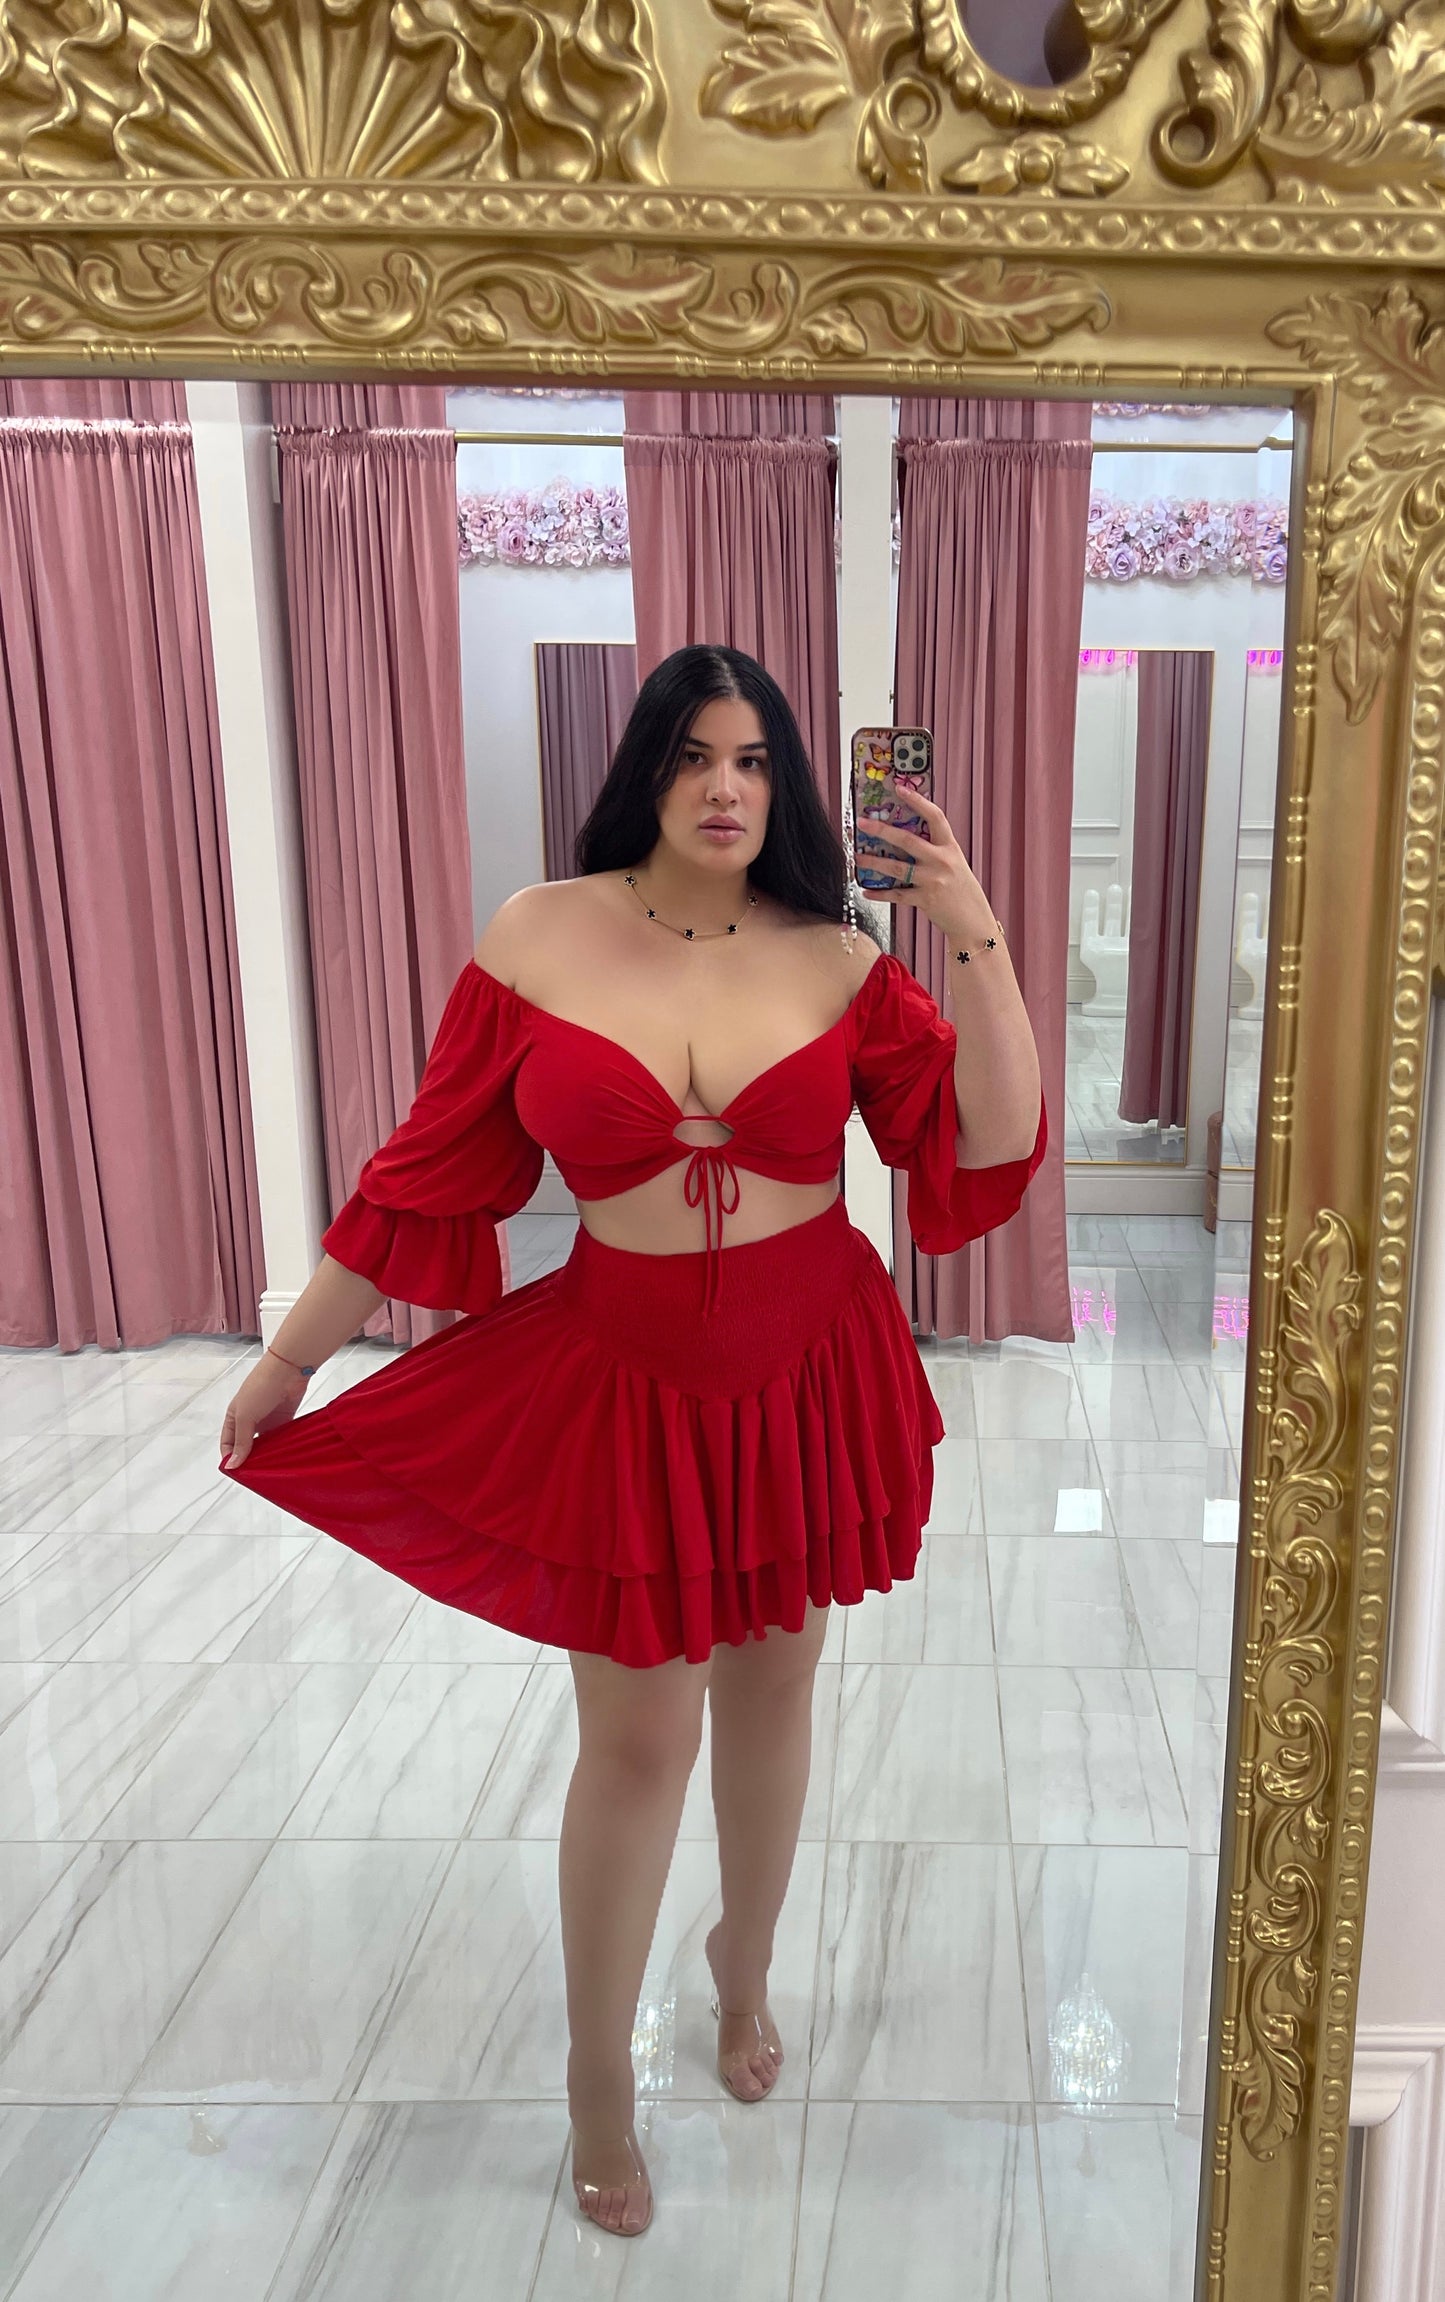 Marilys Skirt Set - Red